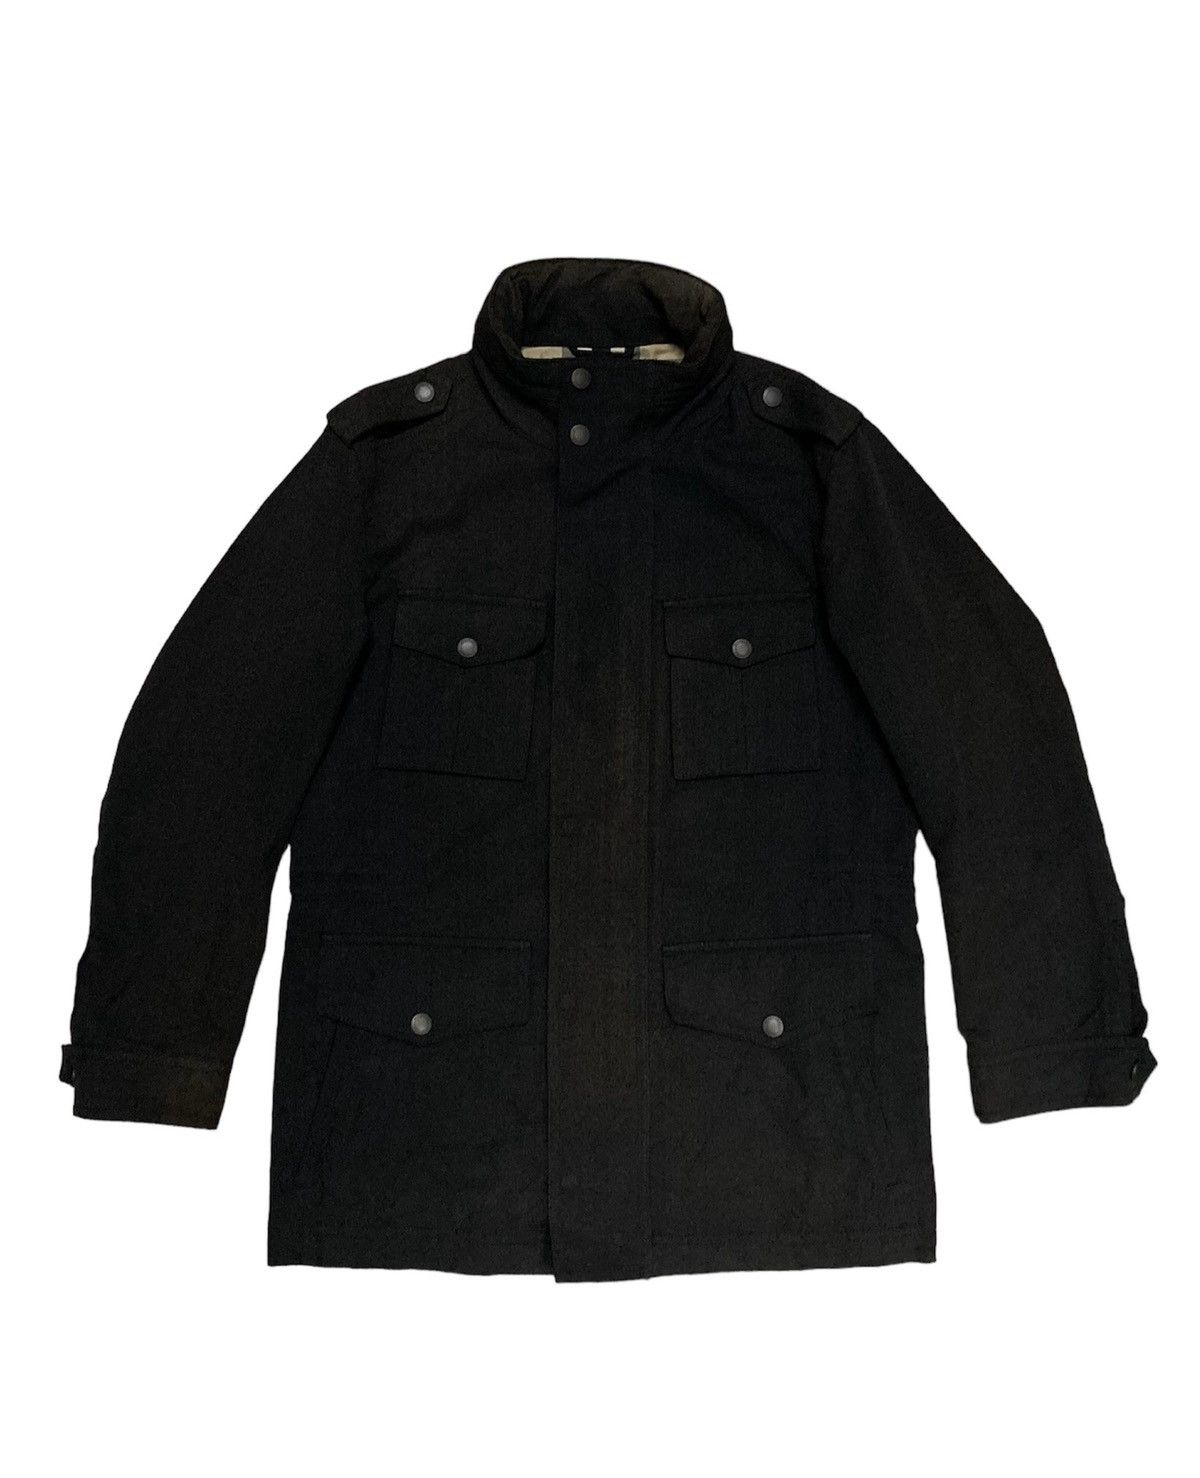 Burberry London Blouson Stored Hooded Jacket - 1